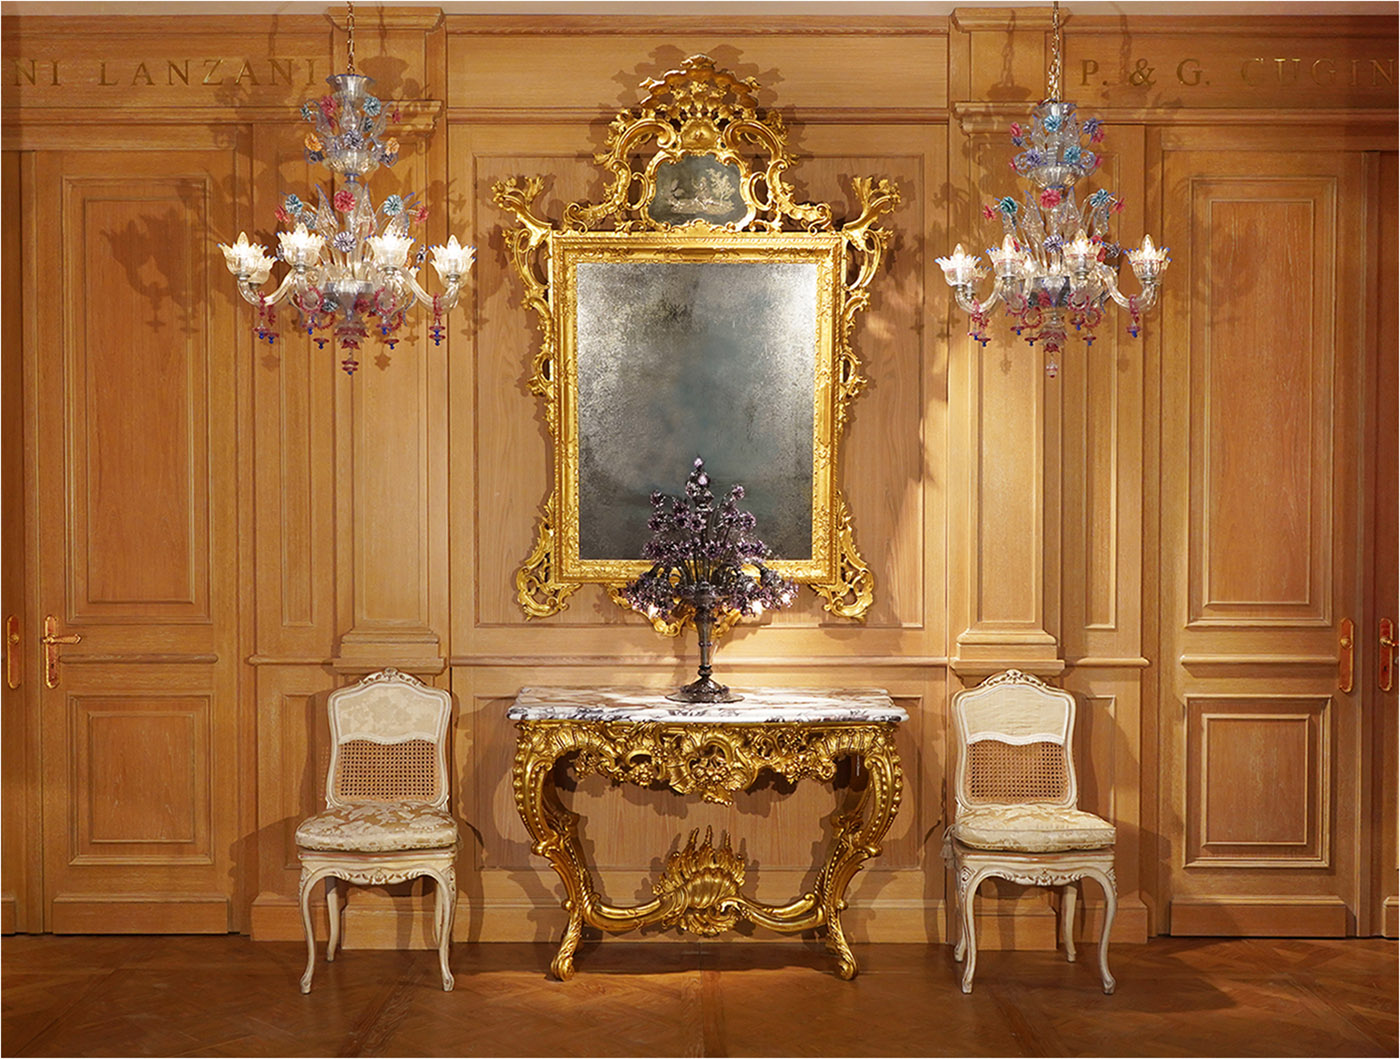 Italian baroque 24k leaf gold consolle, Venetian baroque mirror, Louis XV chairs, Venetian flambeau, Murano chandeliere, classical oak boiserie | P.& G. Cugini Lanzani